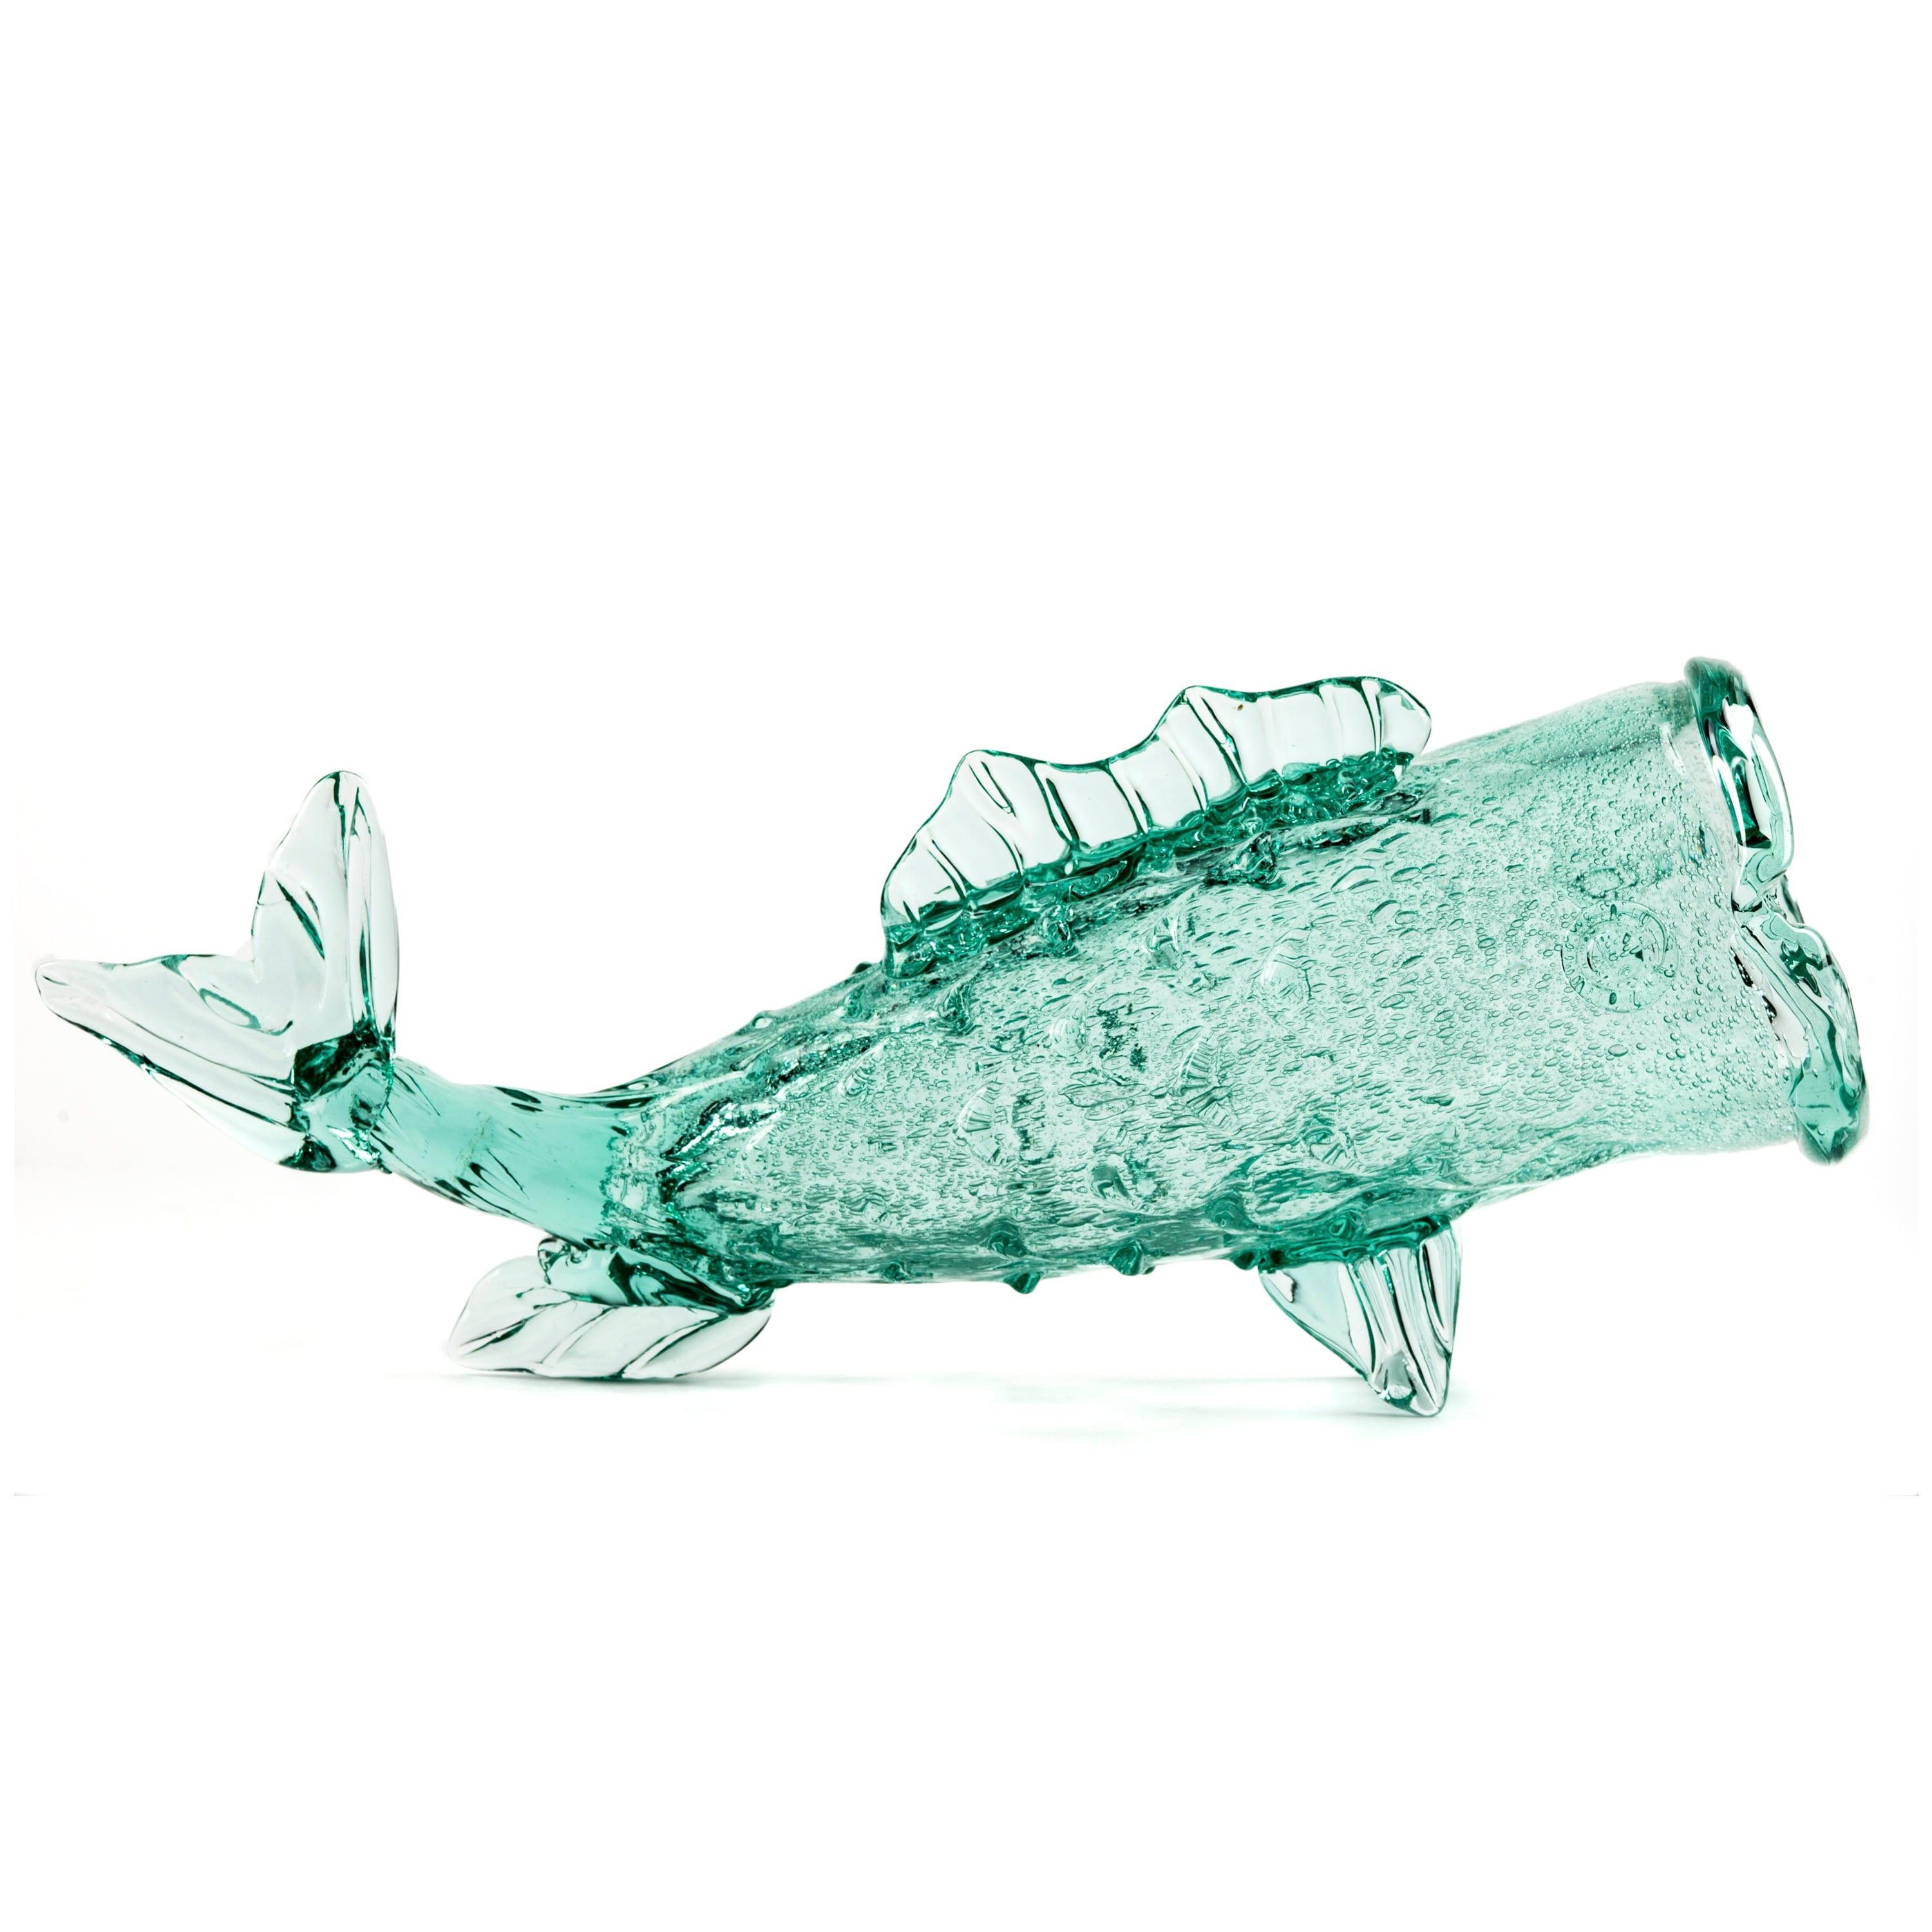 Pojemnik FISH zielony, Pols Potten, Eye on Design